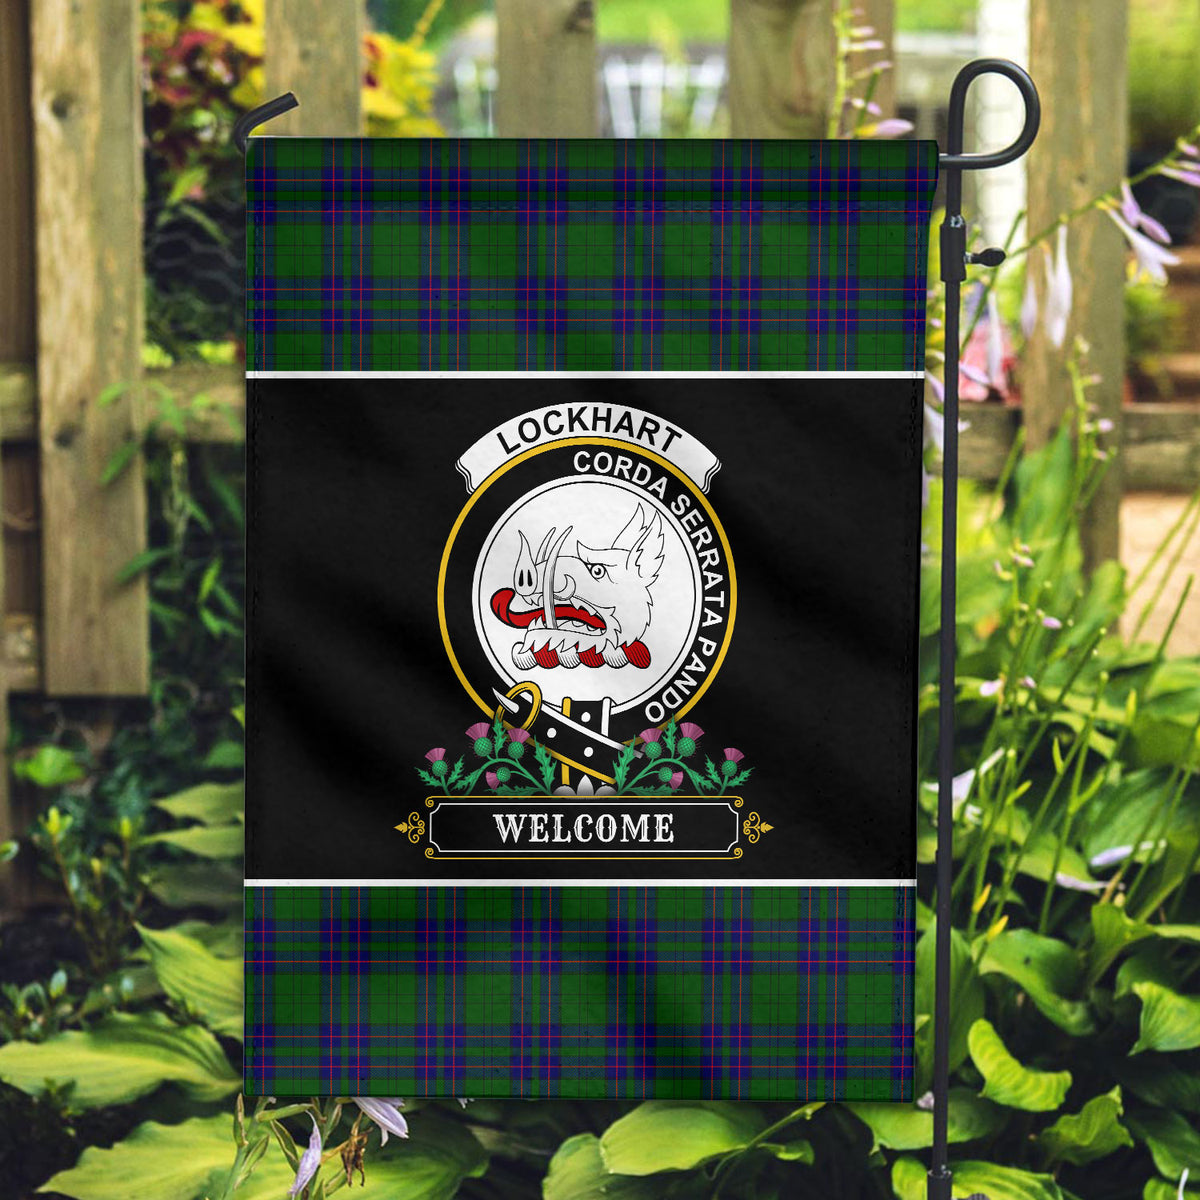 Lockhart Modern Tartan Crest Garden Flag - Welcome Style